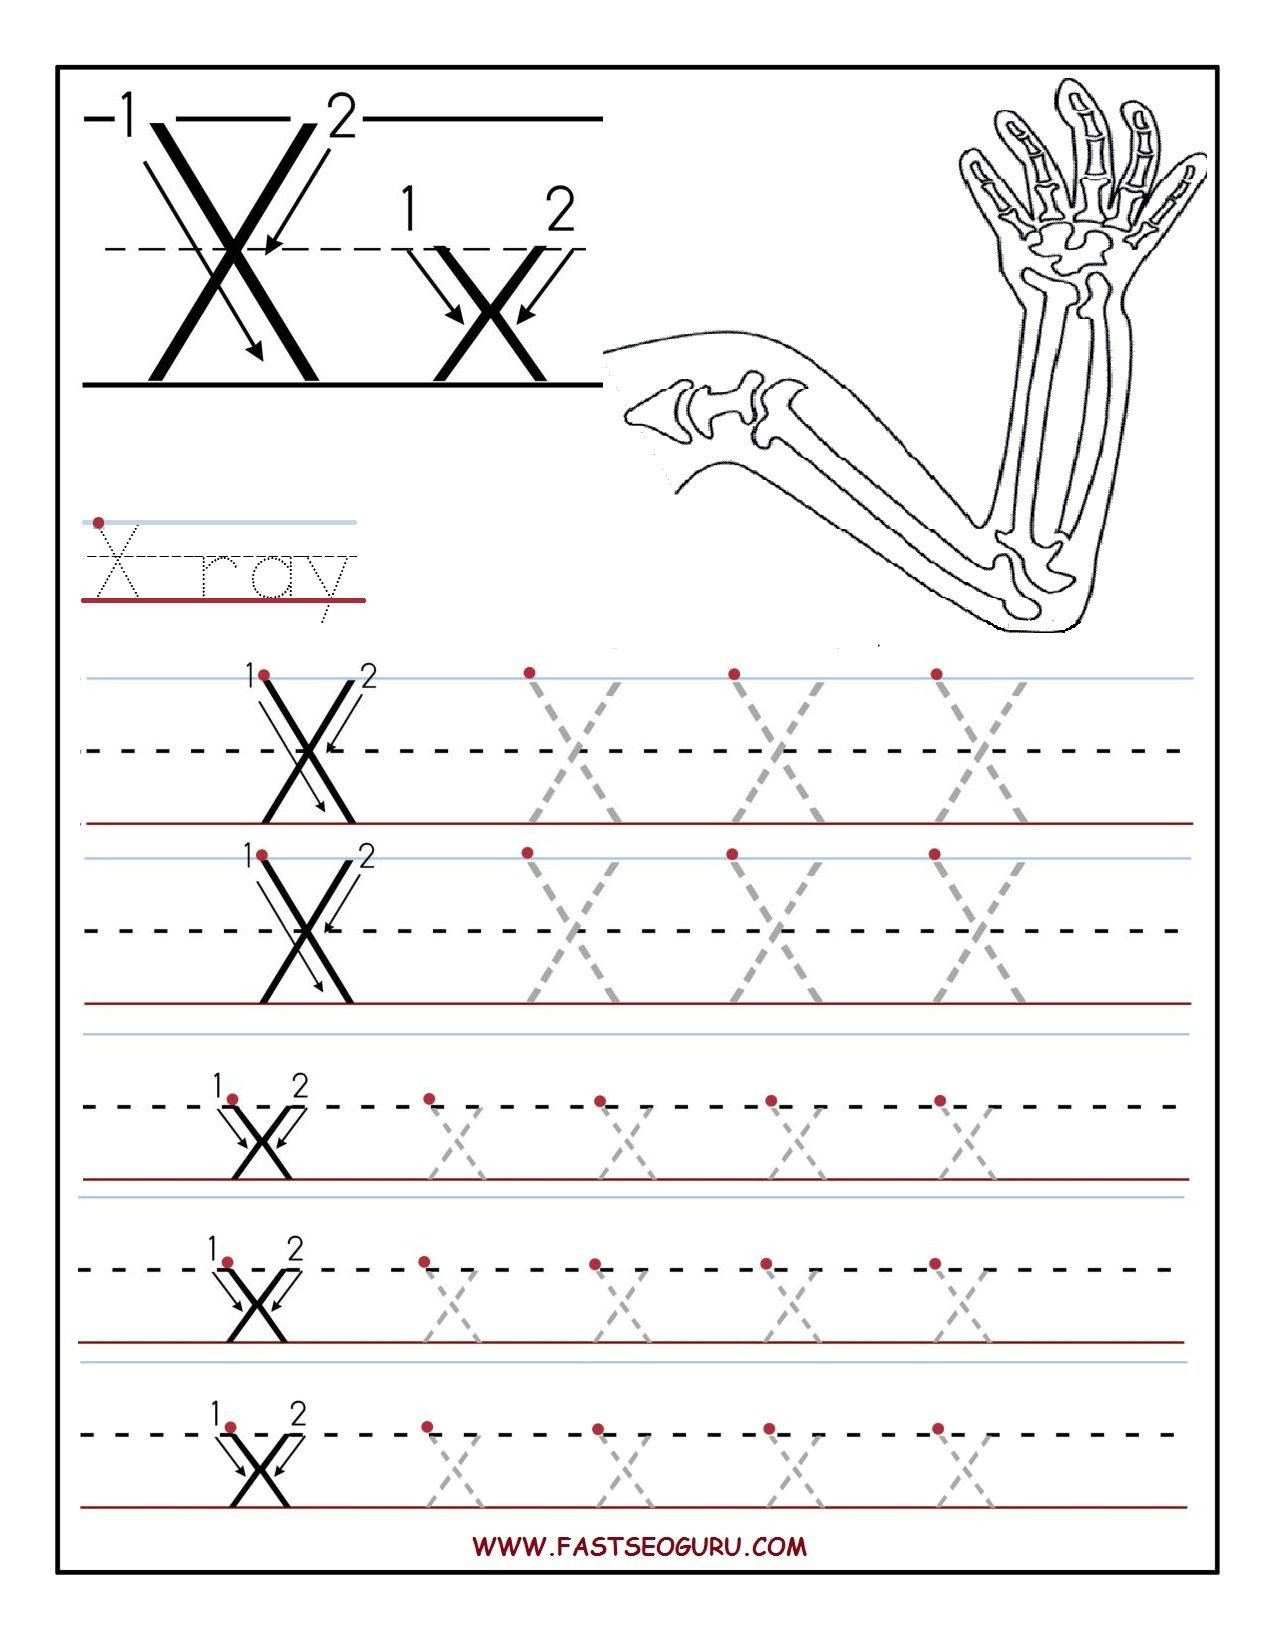 Letter X Worksheets for Preschoolers Letter X Worksheets Preschool Free